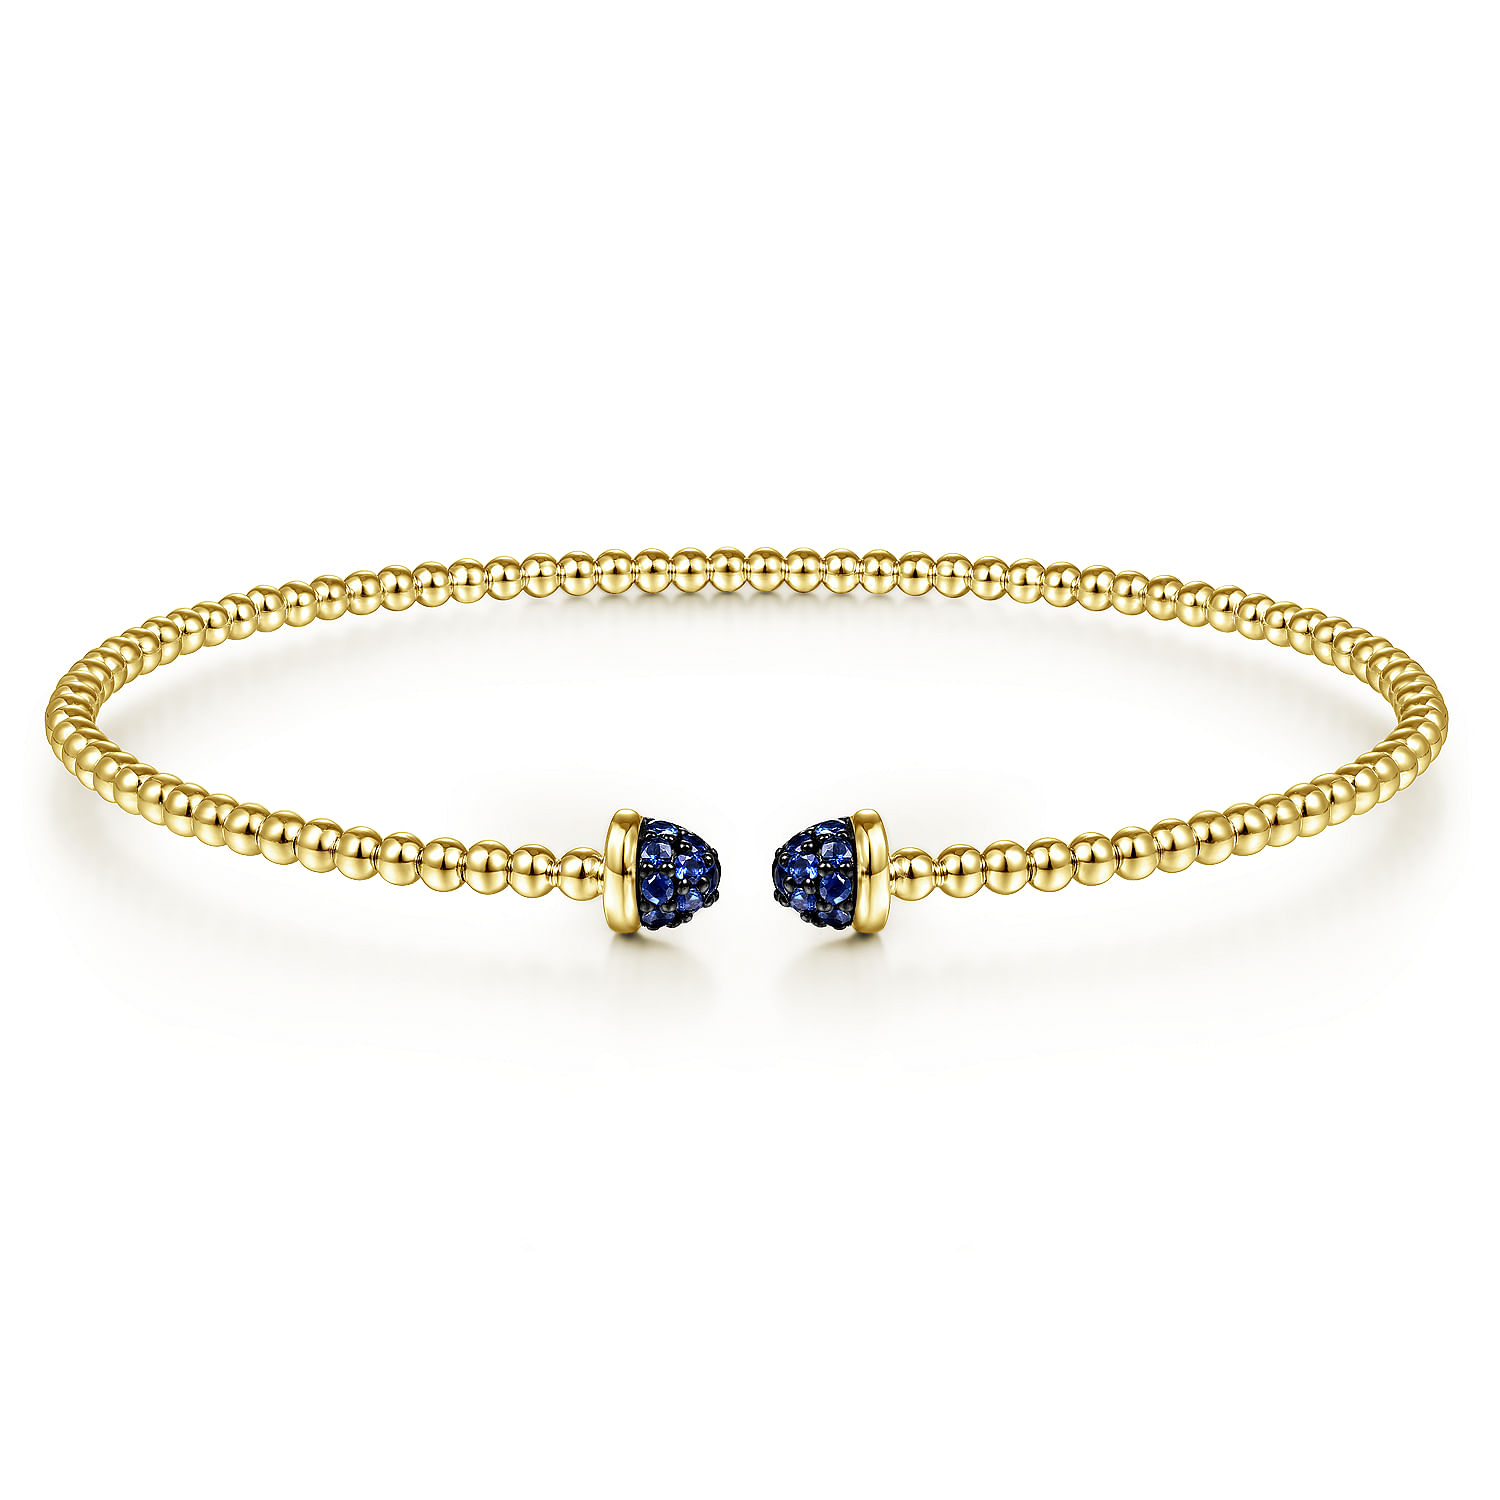 14K Yellow Gold Bujukan Bead Cuff Bracelet with Sapphire Pav¿ª Caps